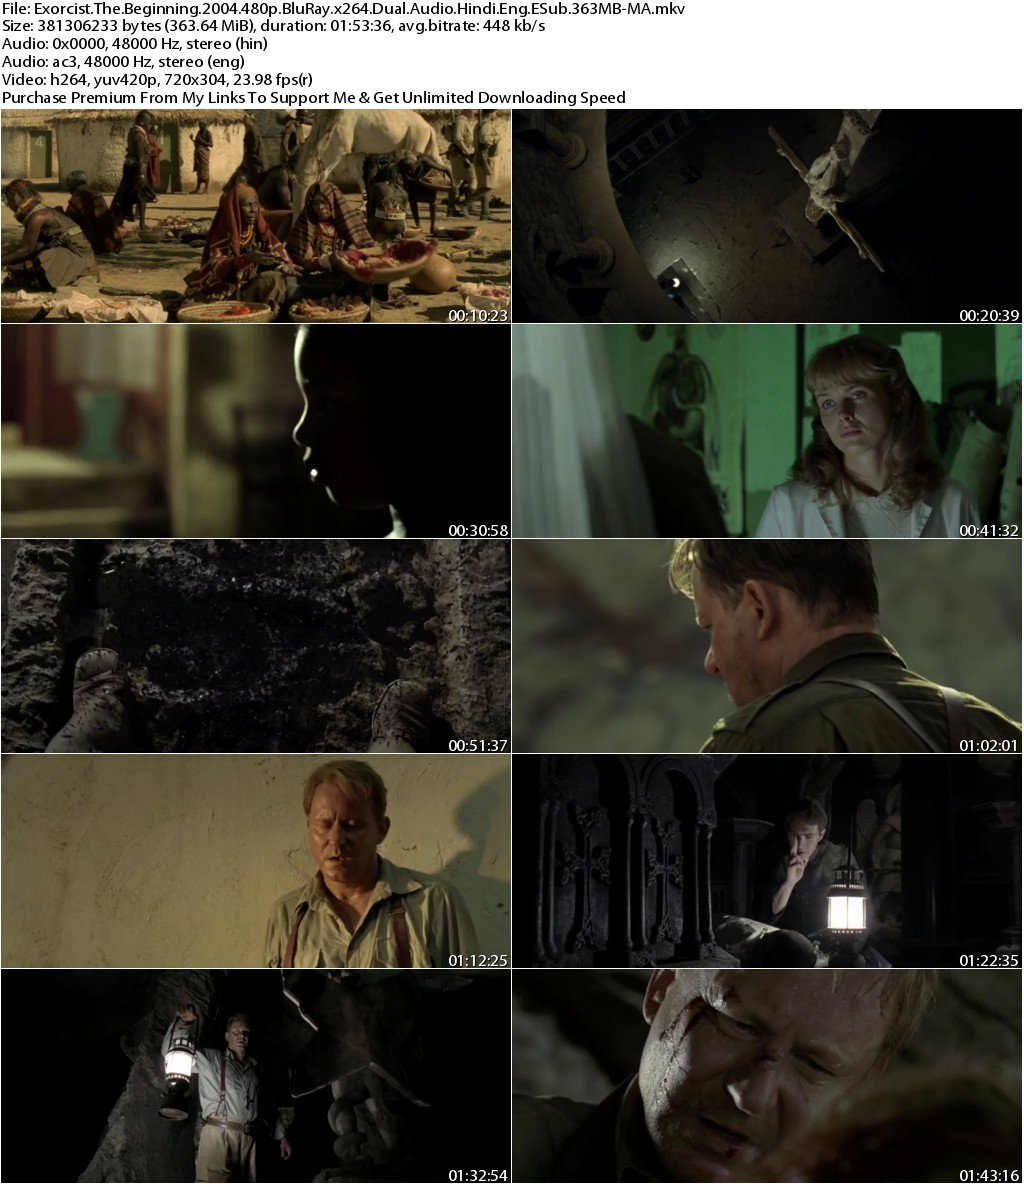 Exorcist The Beginning (2004) 480p BluRay x264 Dual Audio Hindi Eng ESub 363MB-MA